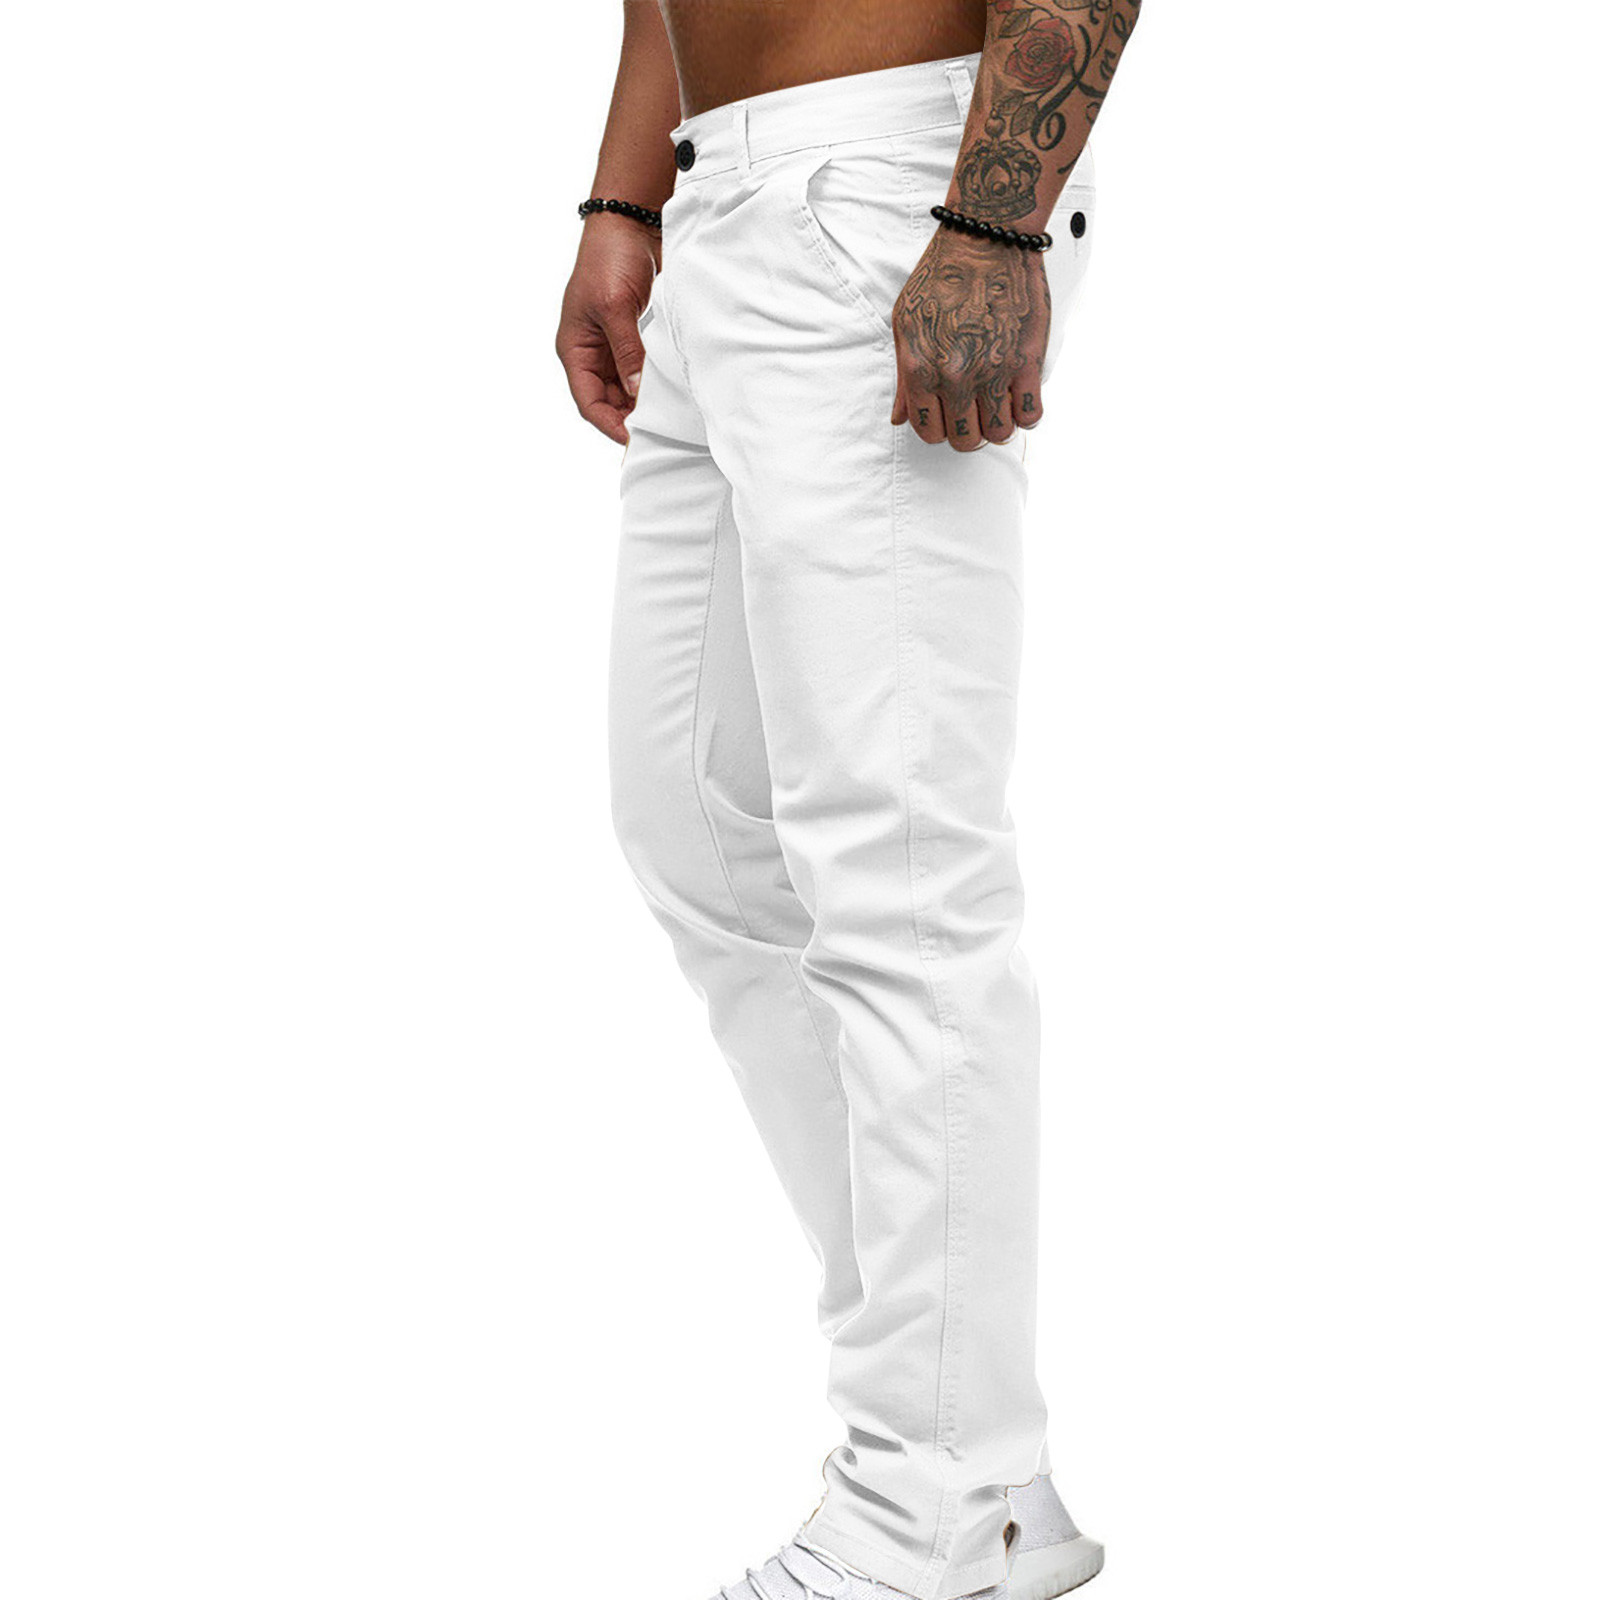 DeHolifer Mens Casual Chinos Pants Cotton Slacks Elastic Waistband Classic Fit Flat Front Khaki Pant White 4XL - image 4 of 5